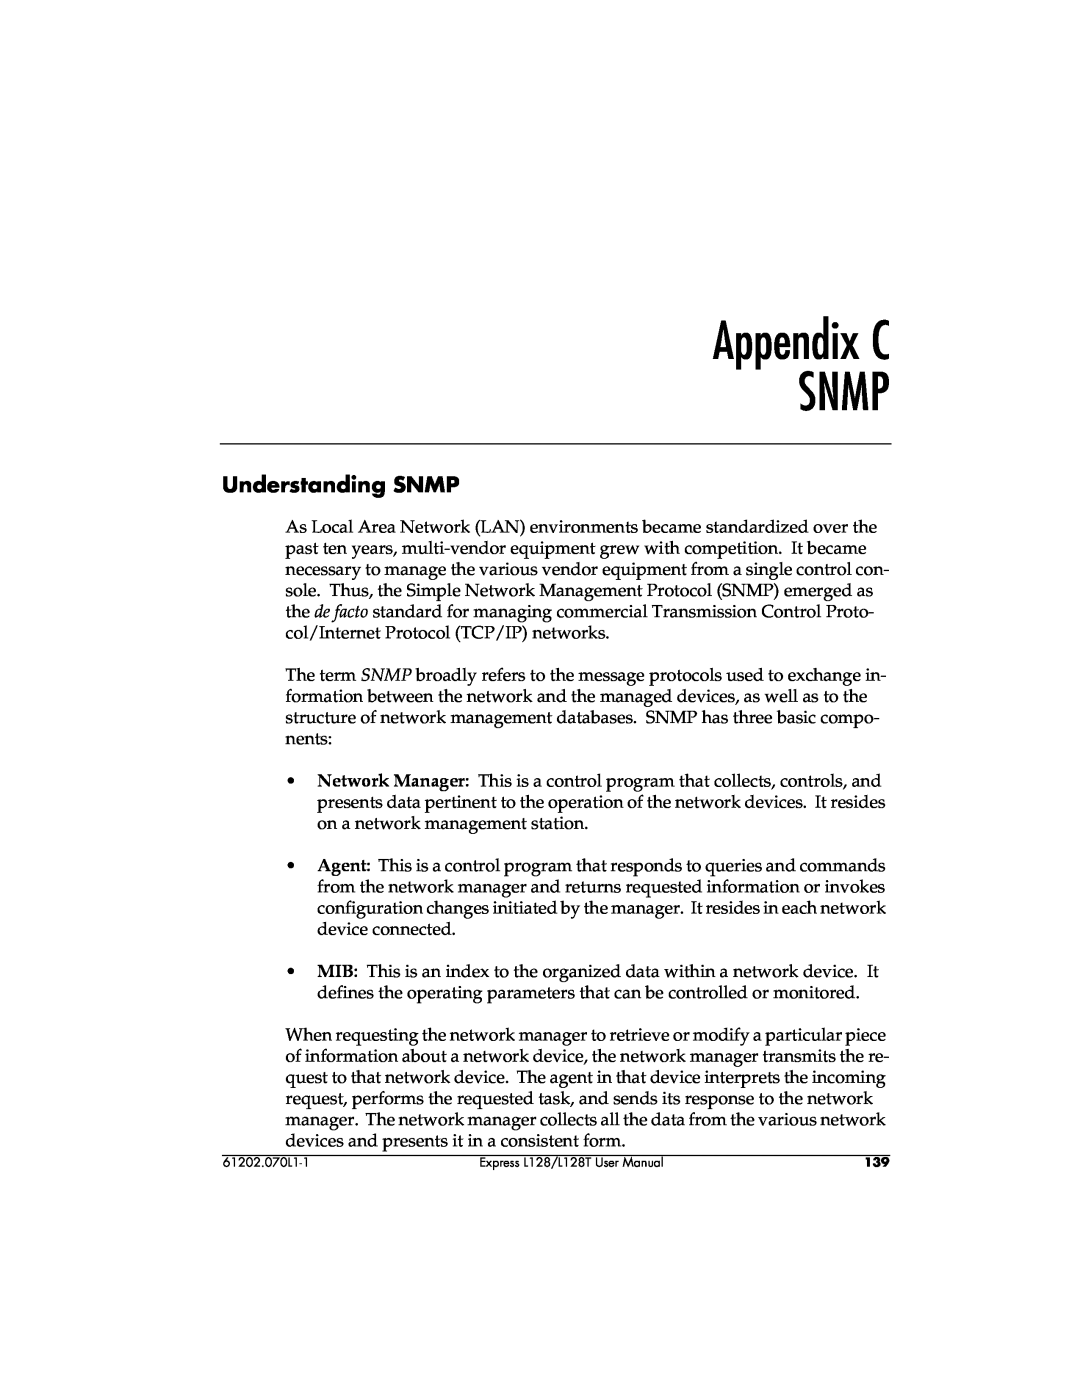 ADTRAN L128T user manual Appendix C SNMP, Understanding SNMP 